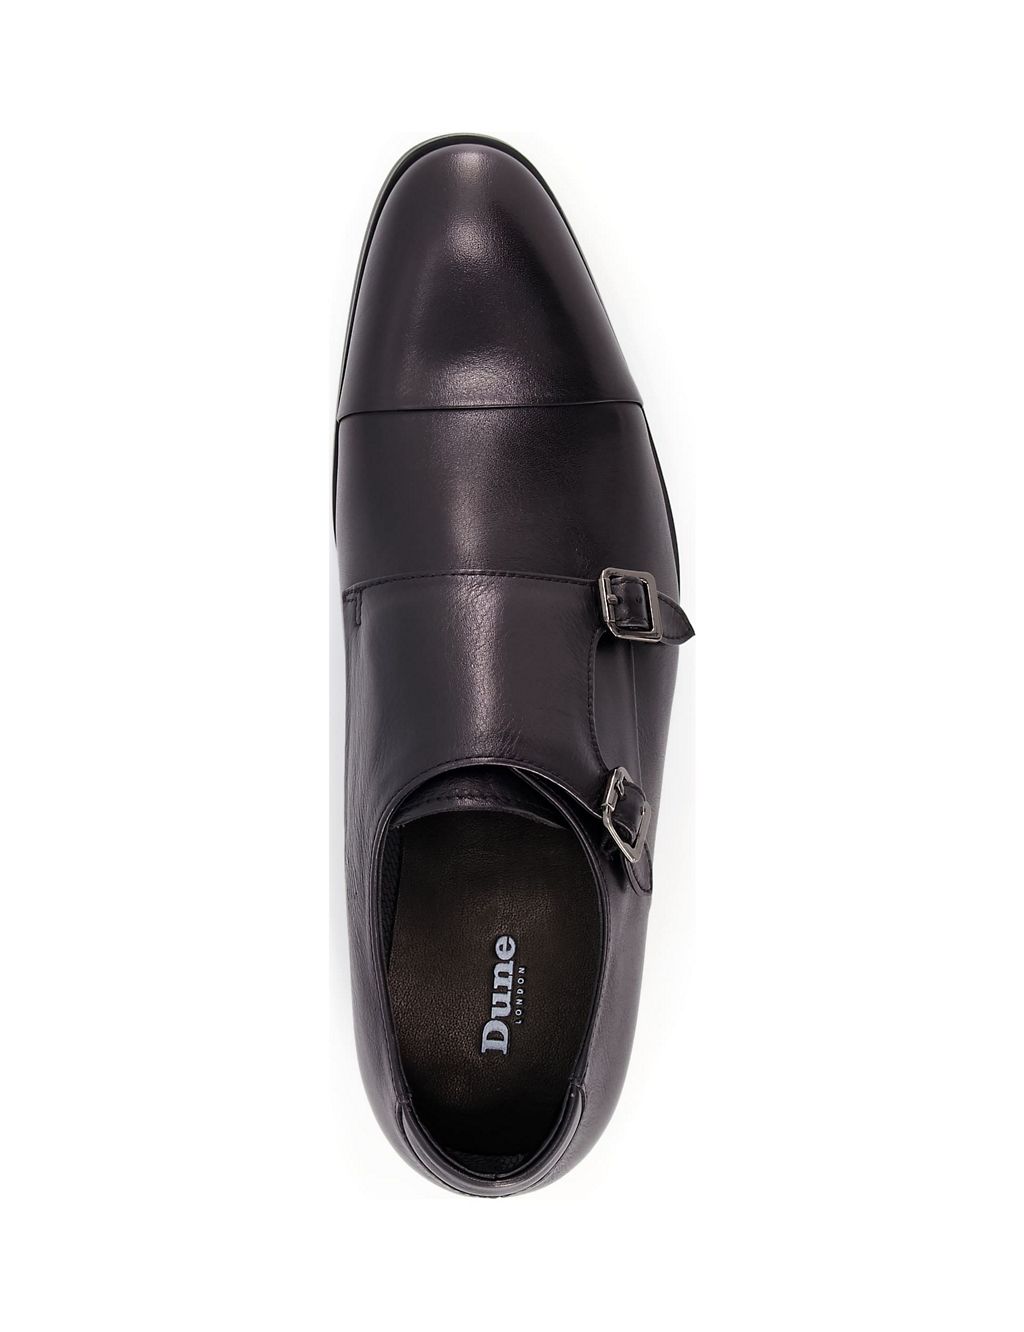 Leather Double Monk Strap Shoes | Dune London | M&S